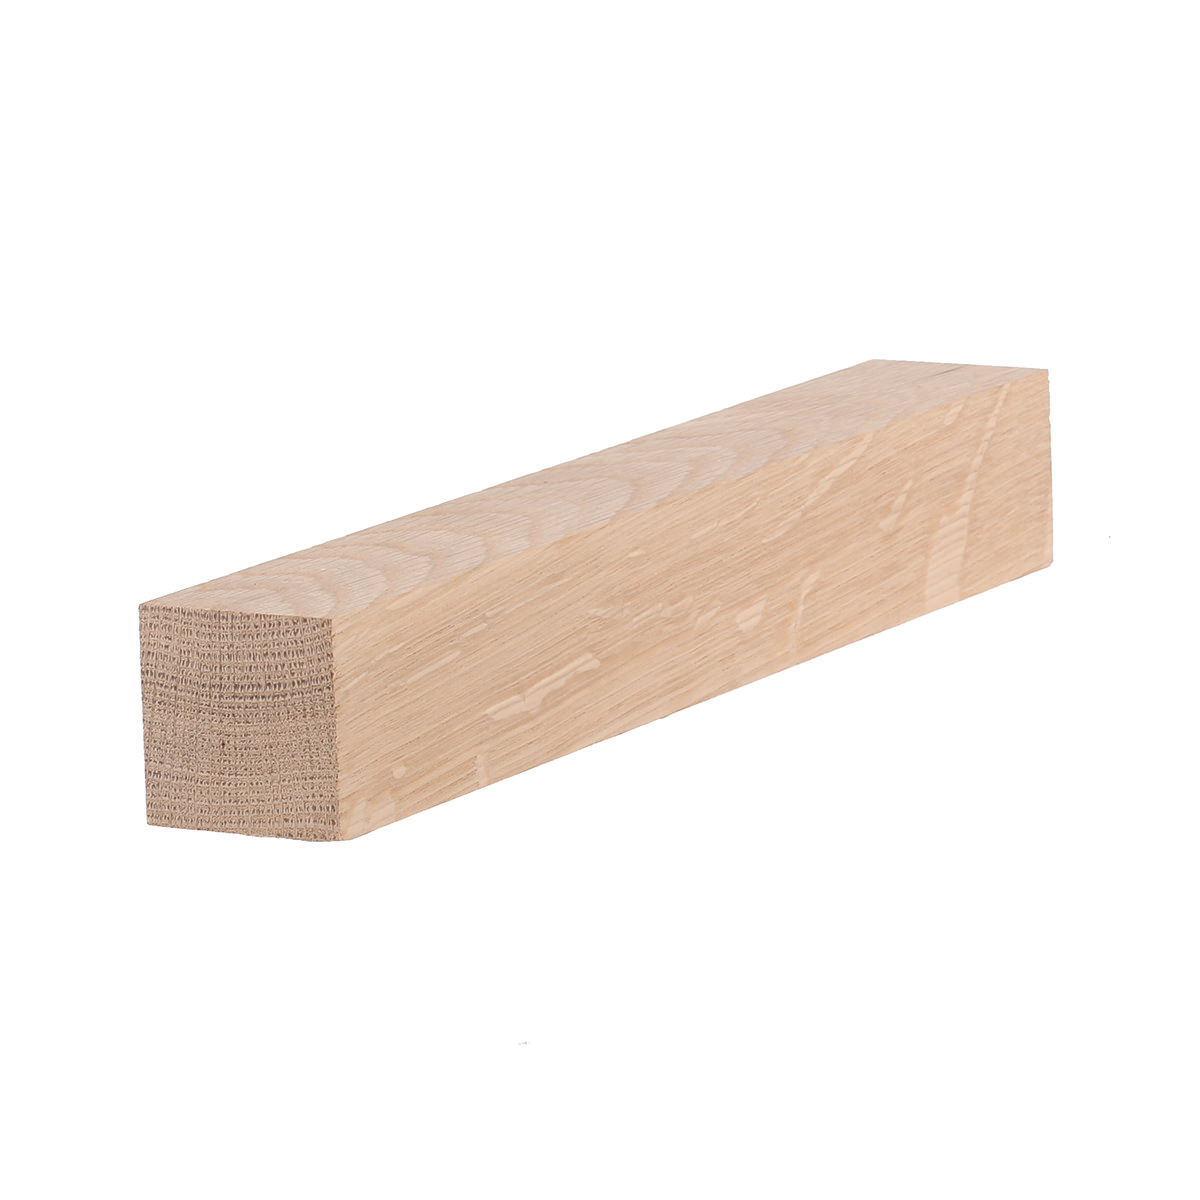 2x2 (13/4" x 13/4") White Oak S4S Lumber & Square Stock